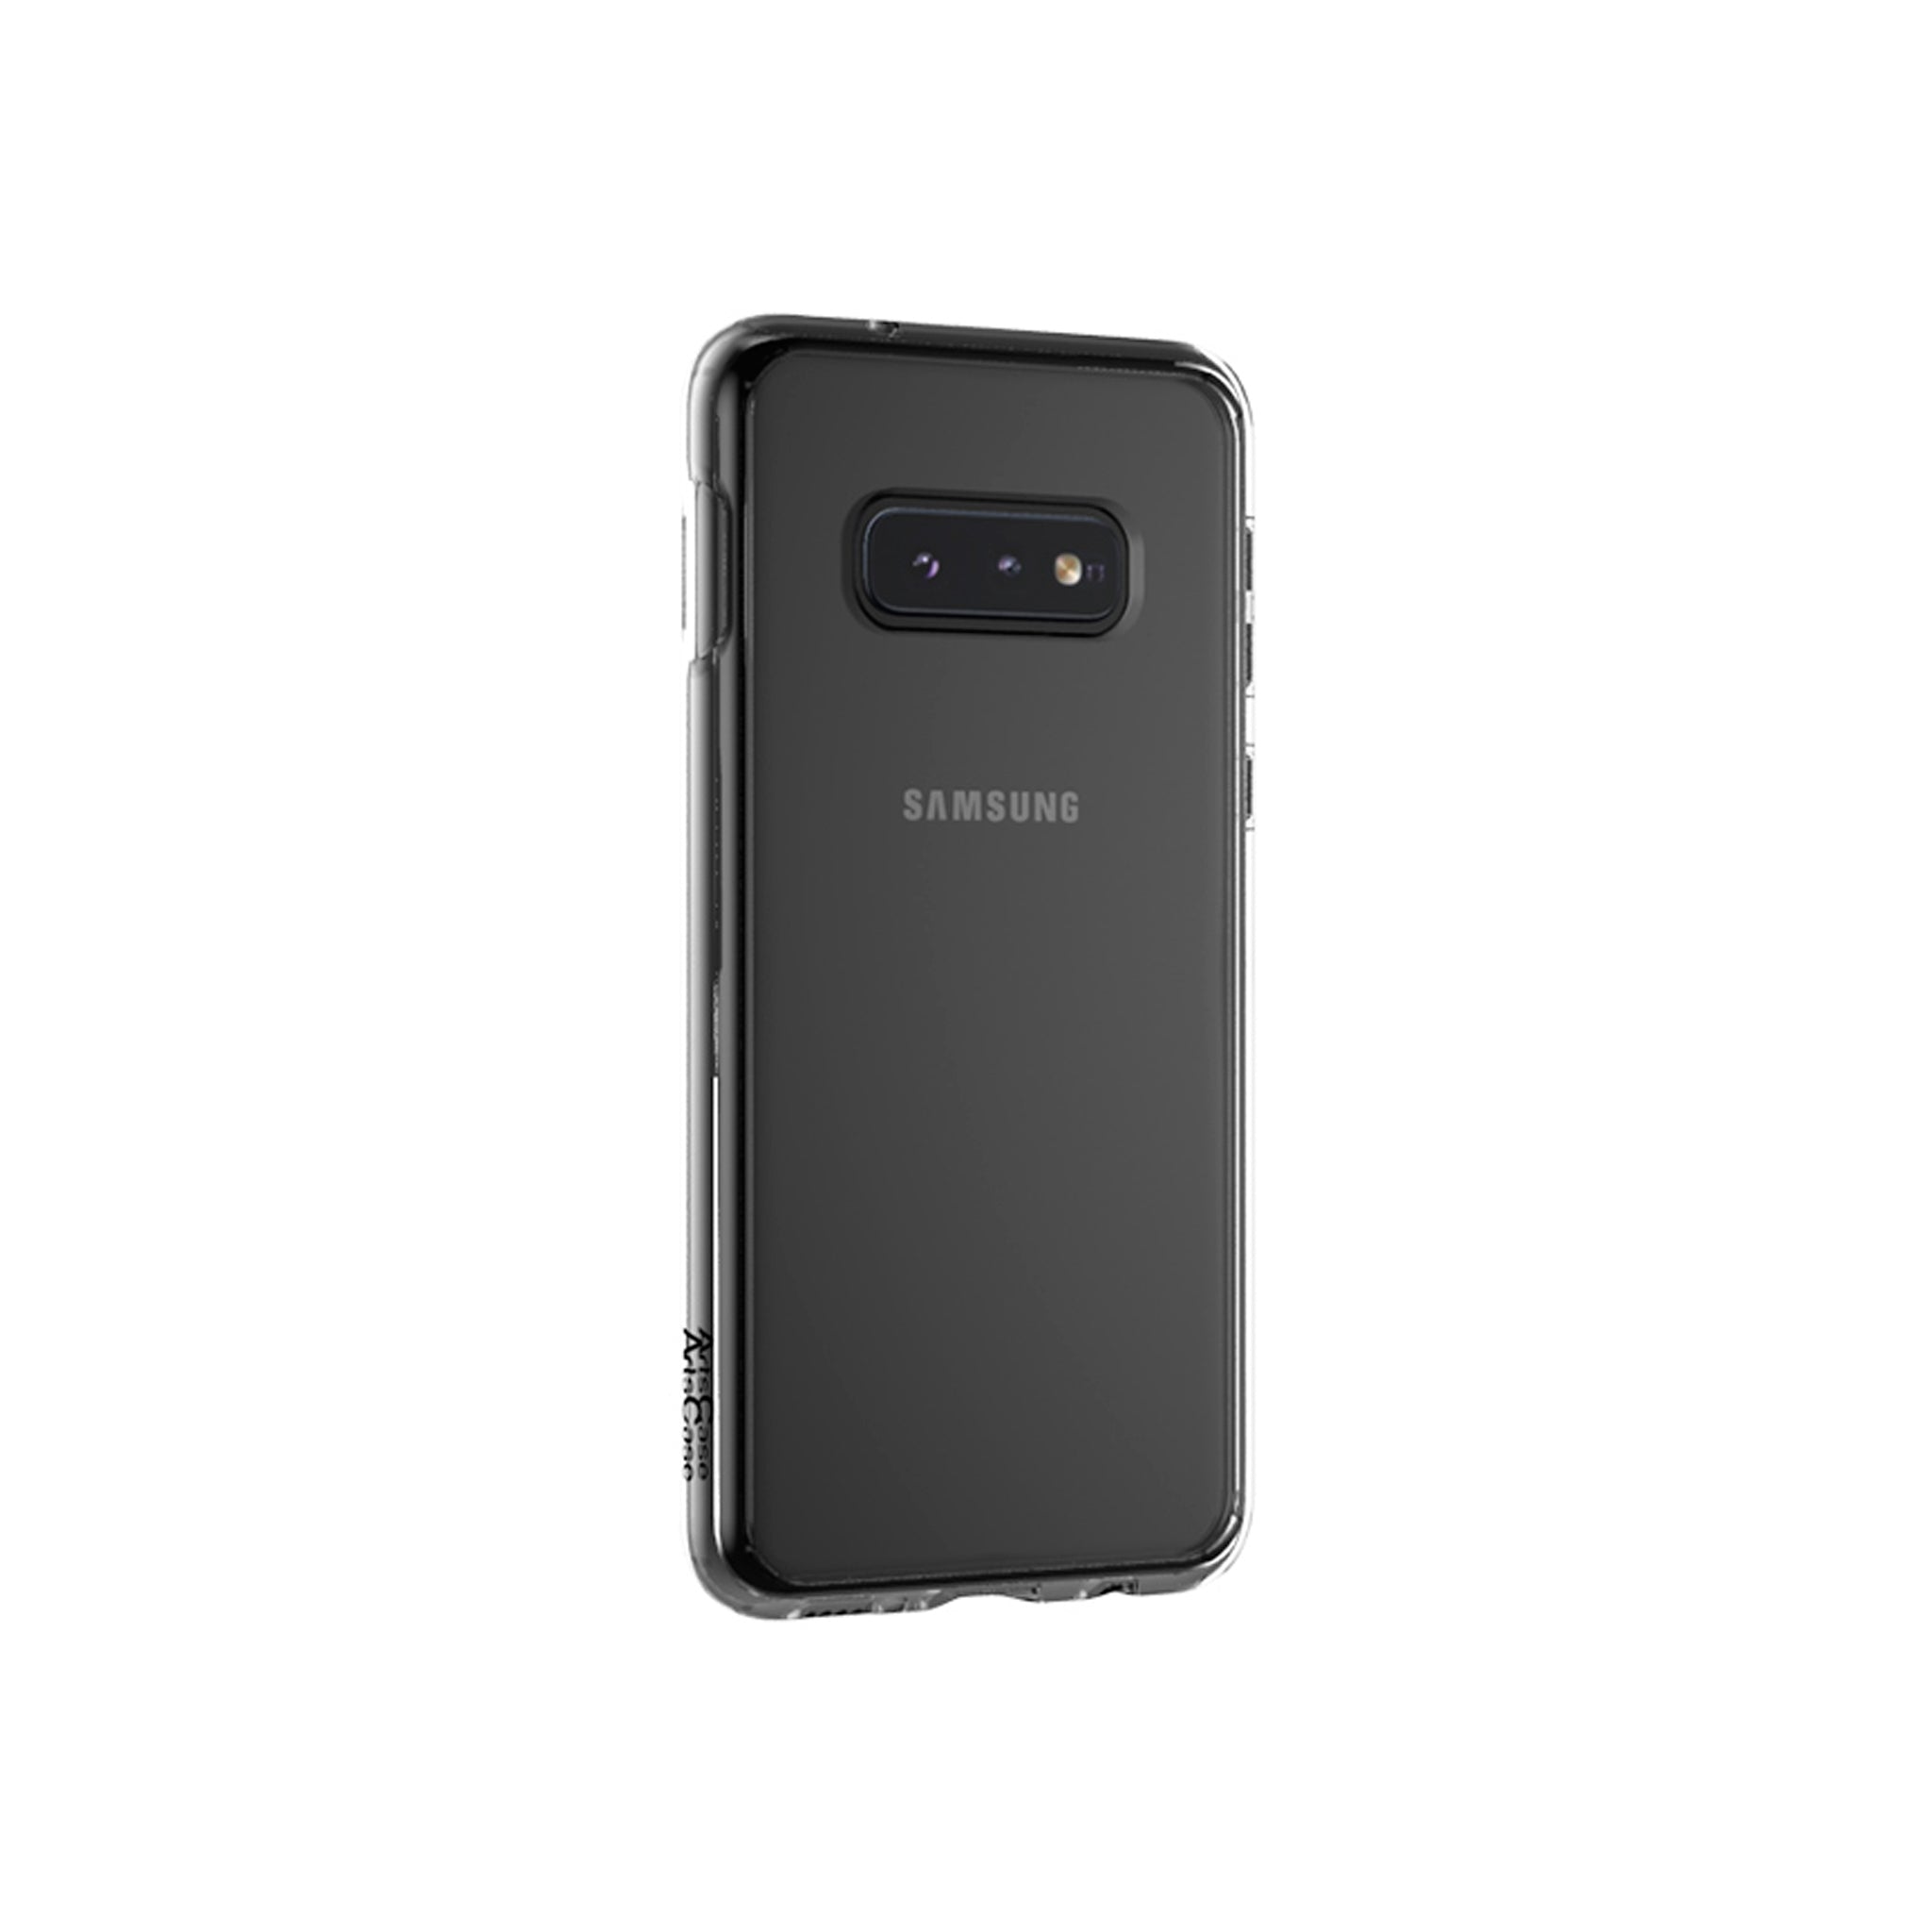 ArtsCase - Impact Hybrid Series for Samsung Galaxy S10e - Clear / Clear